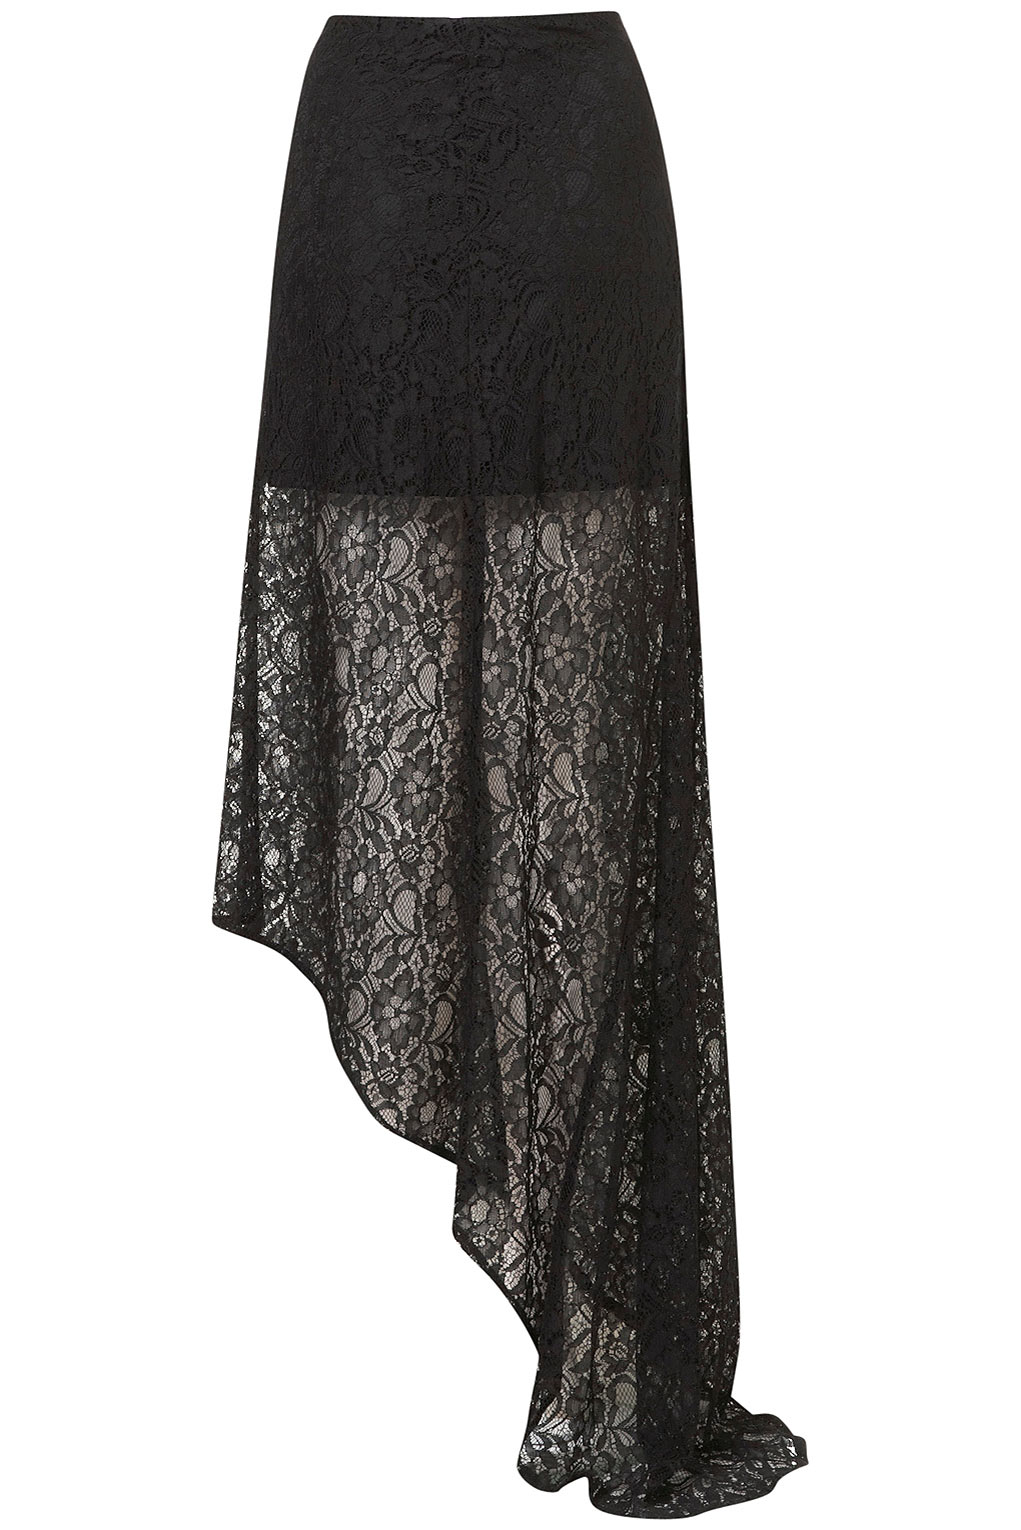 Lyst - Topshop Premium Lace Fishtail Skirt in Black